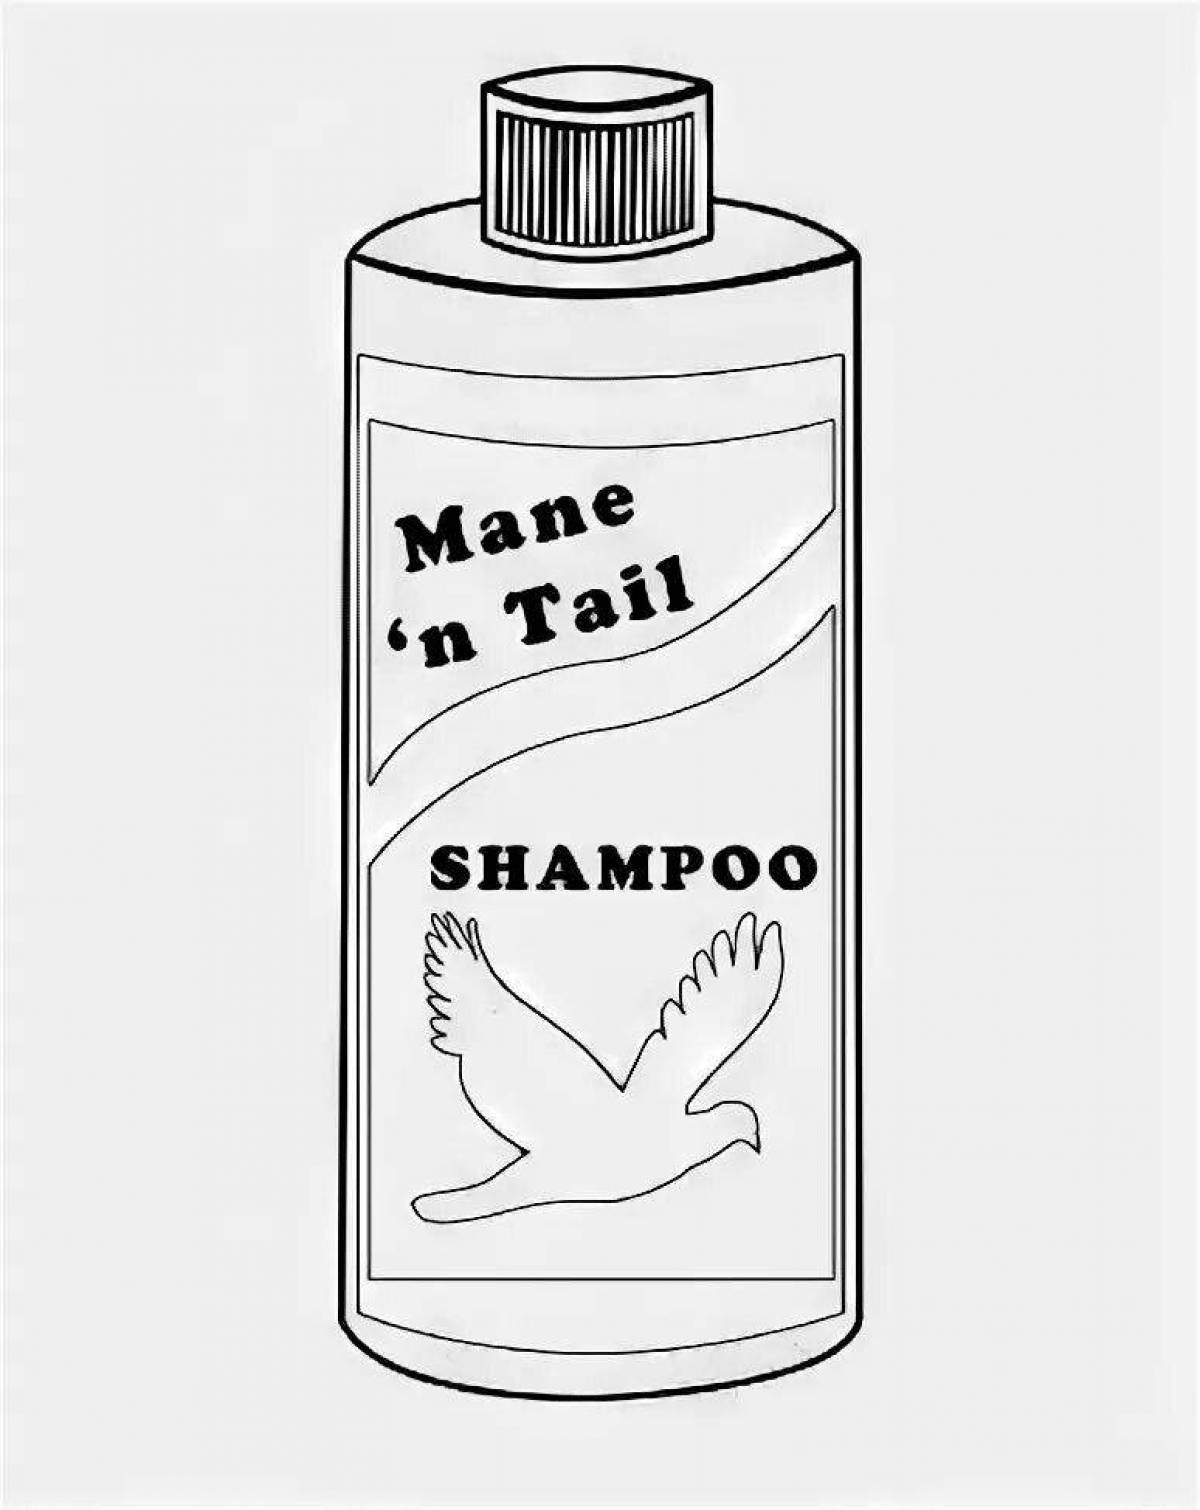 Shine shampoo coloring page